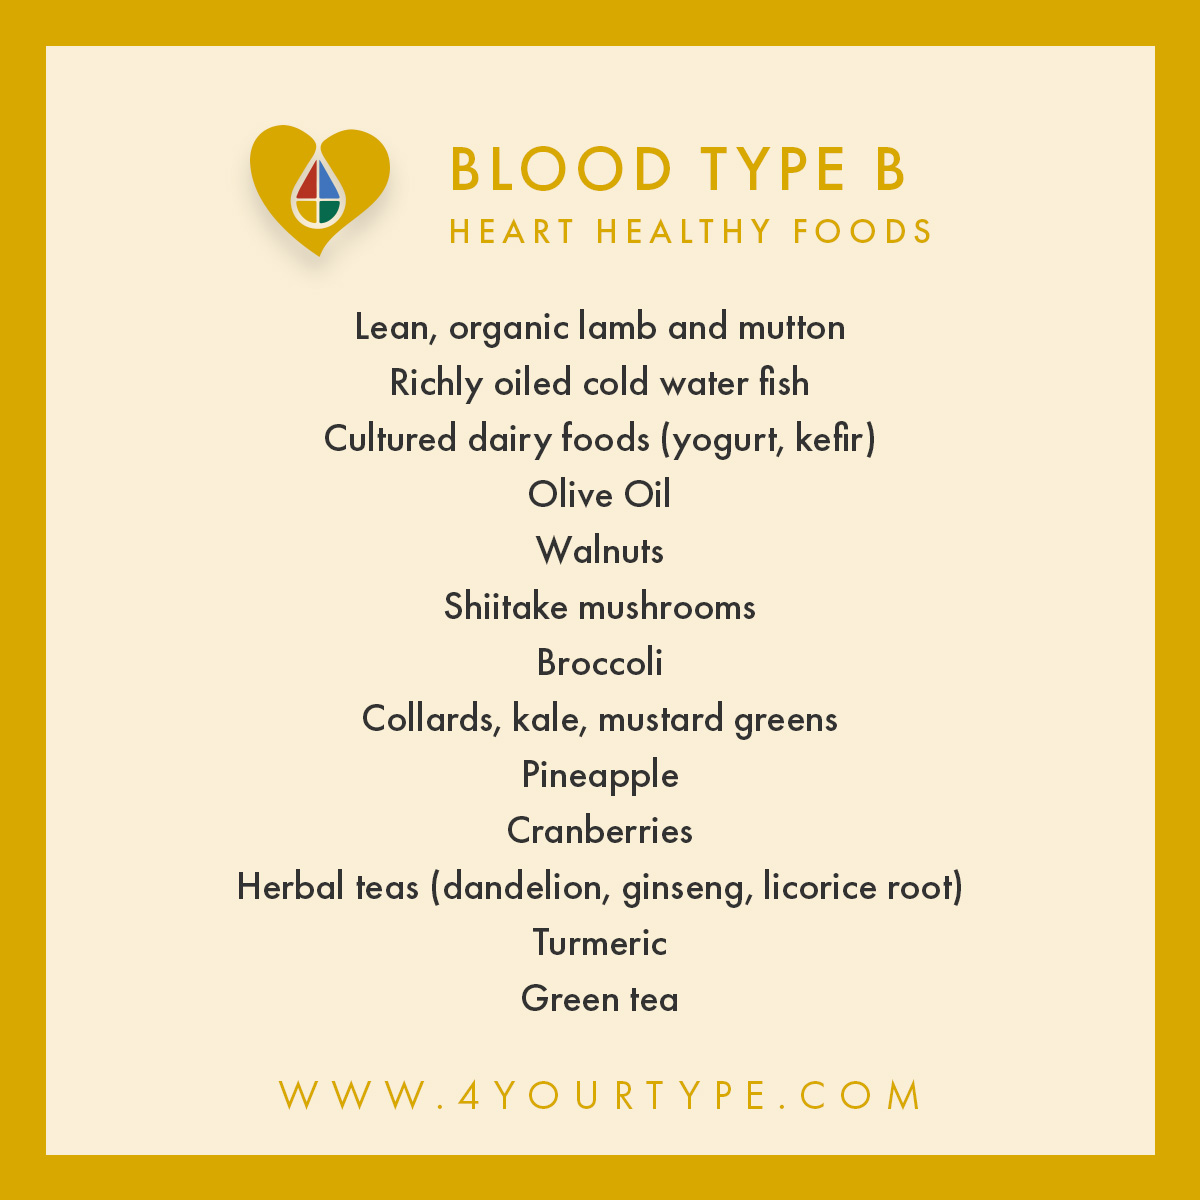 Heart healthy foods blood type B